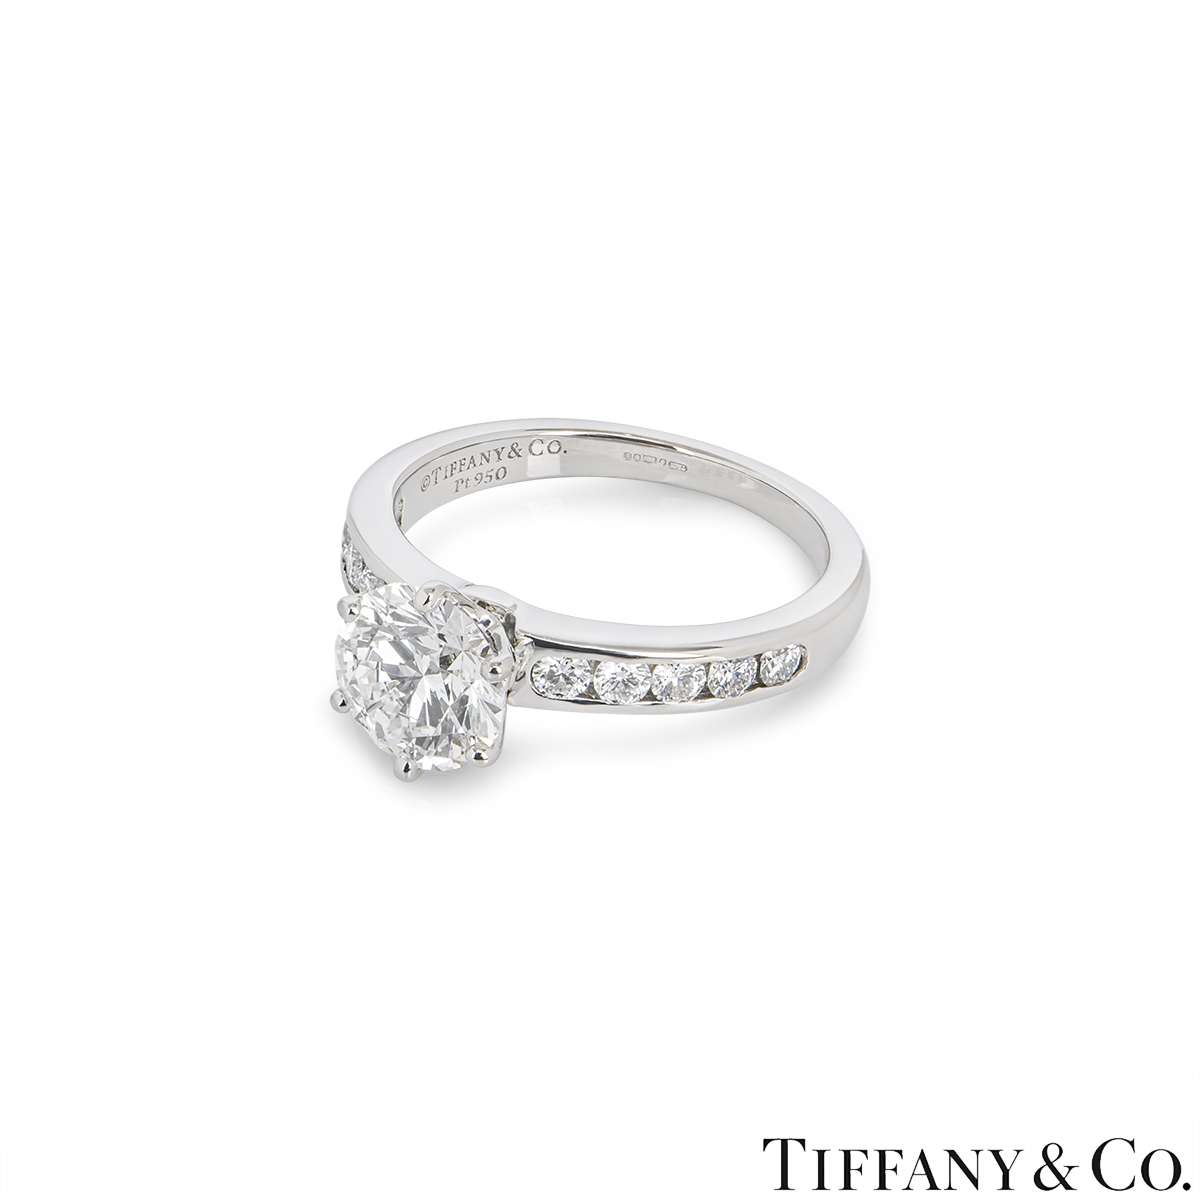 Tiffany & Co. Platinum Round Brilliant Cut Diamond Ring 1.53ct F/VS2